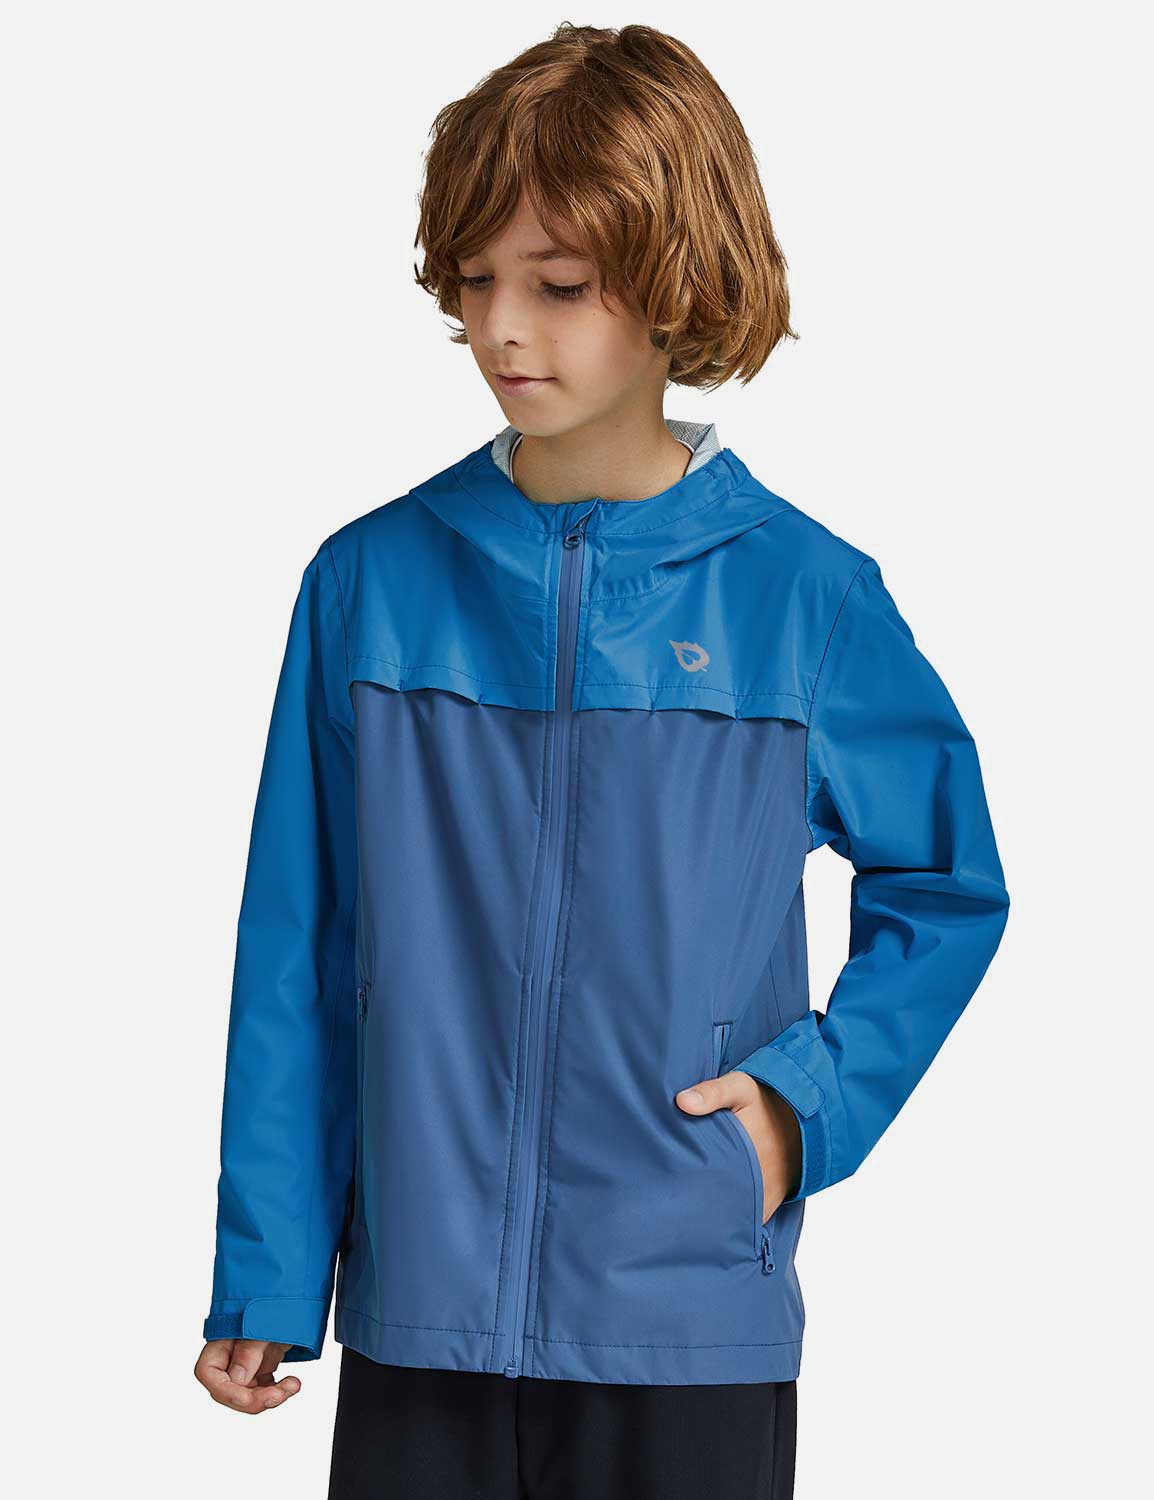 Baleaf Kid's Waterproof Outdoor Hooded Cycling Rain Jacket cai037 Navy/Blue Front